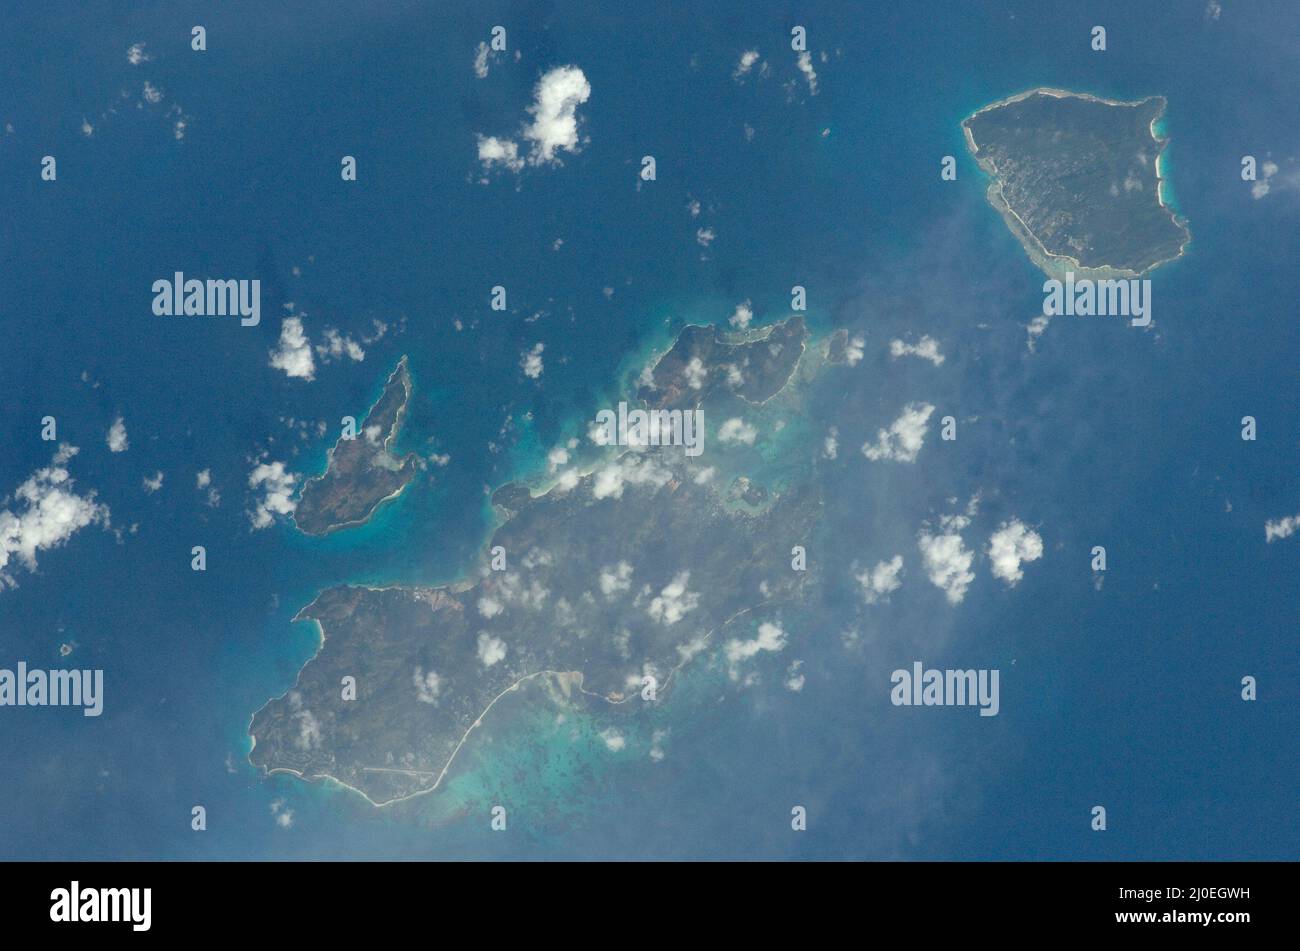 Praslin, La Digue, Curieuse and Aride Islands, Seychelles Stock Photo